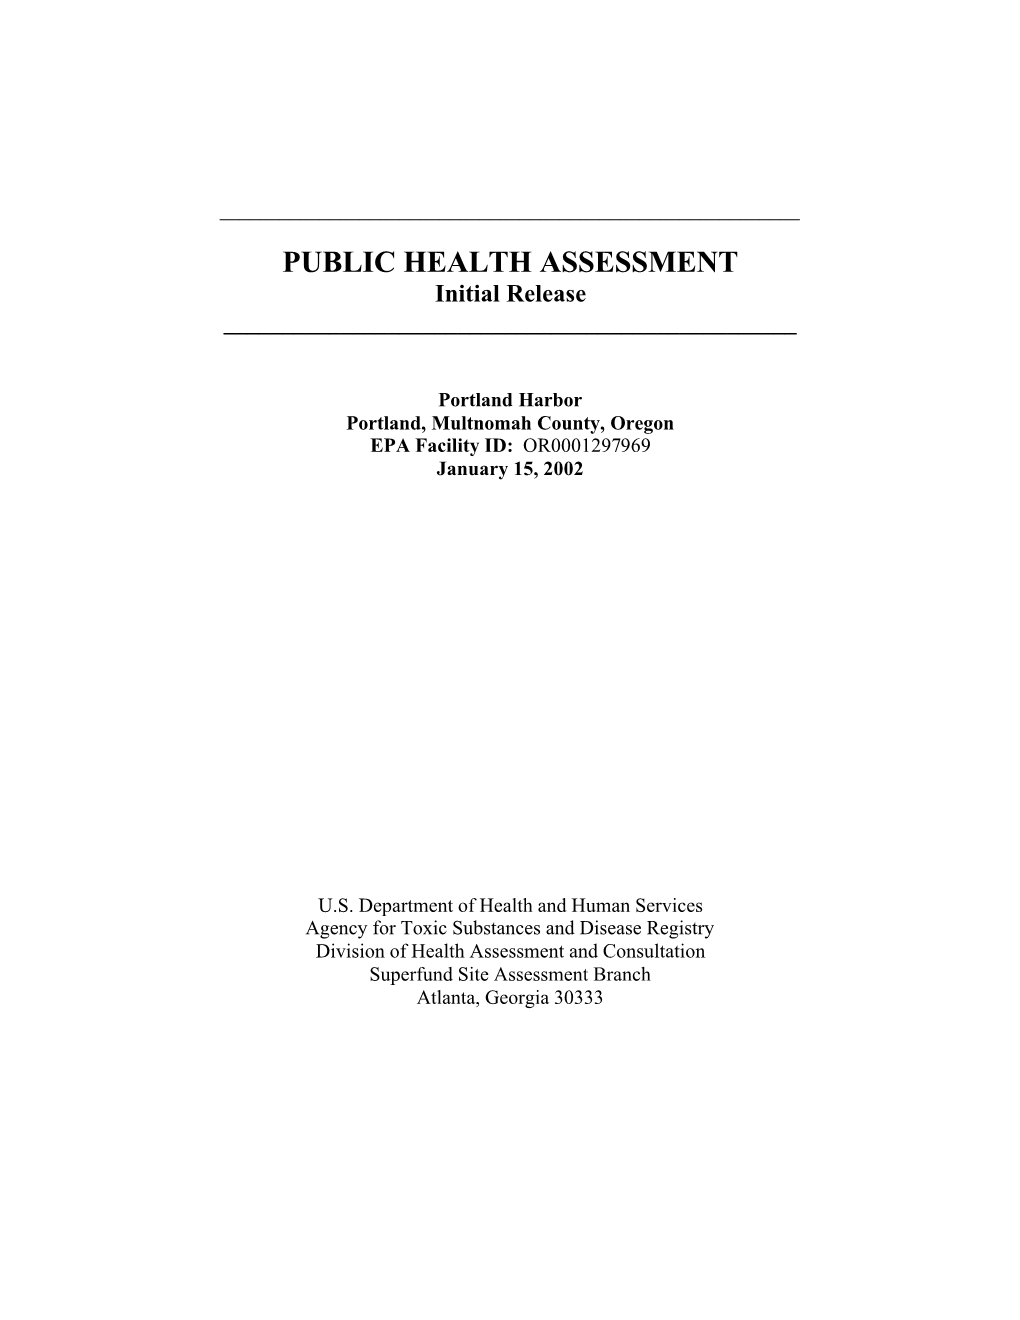 Initial Public Health Assessment